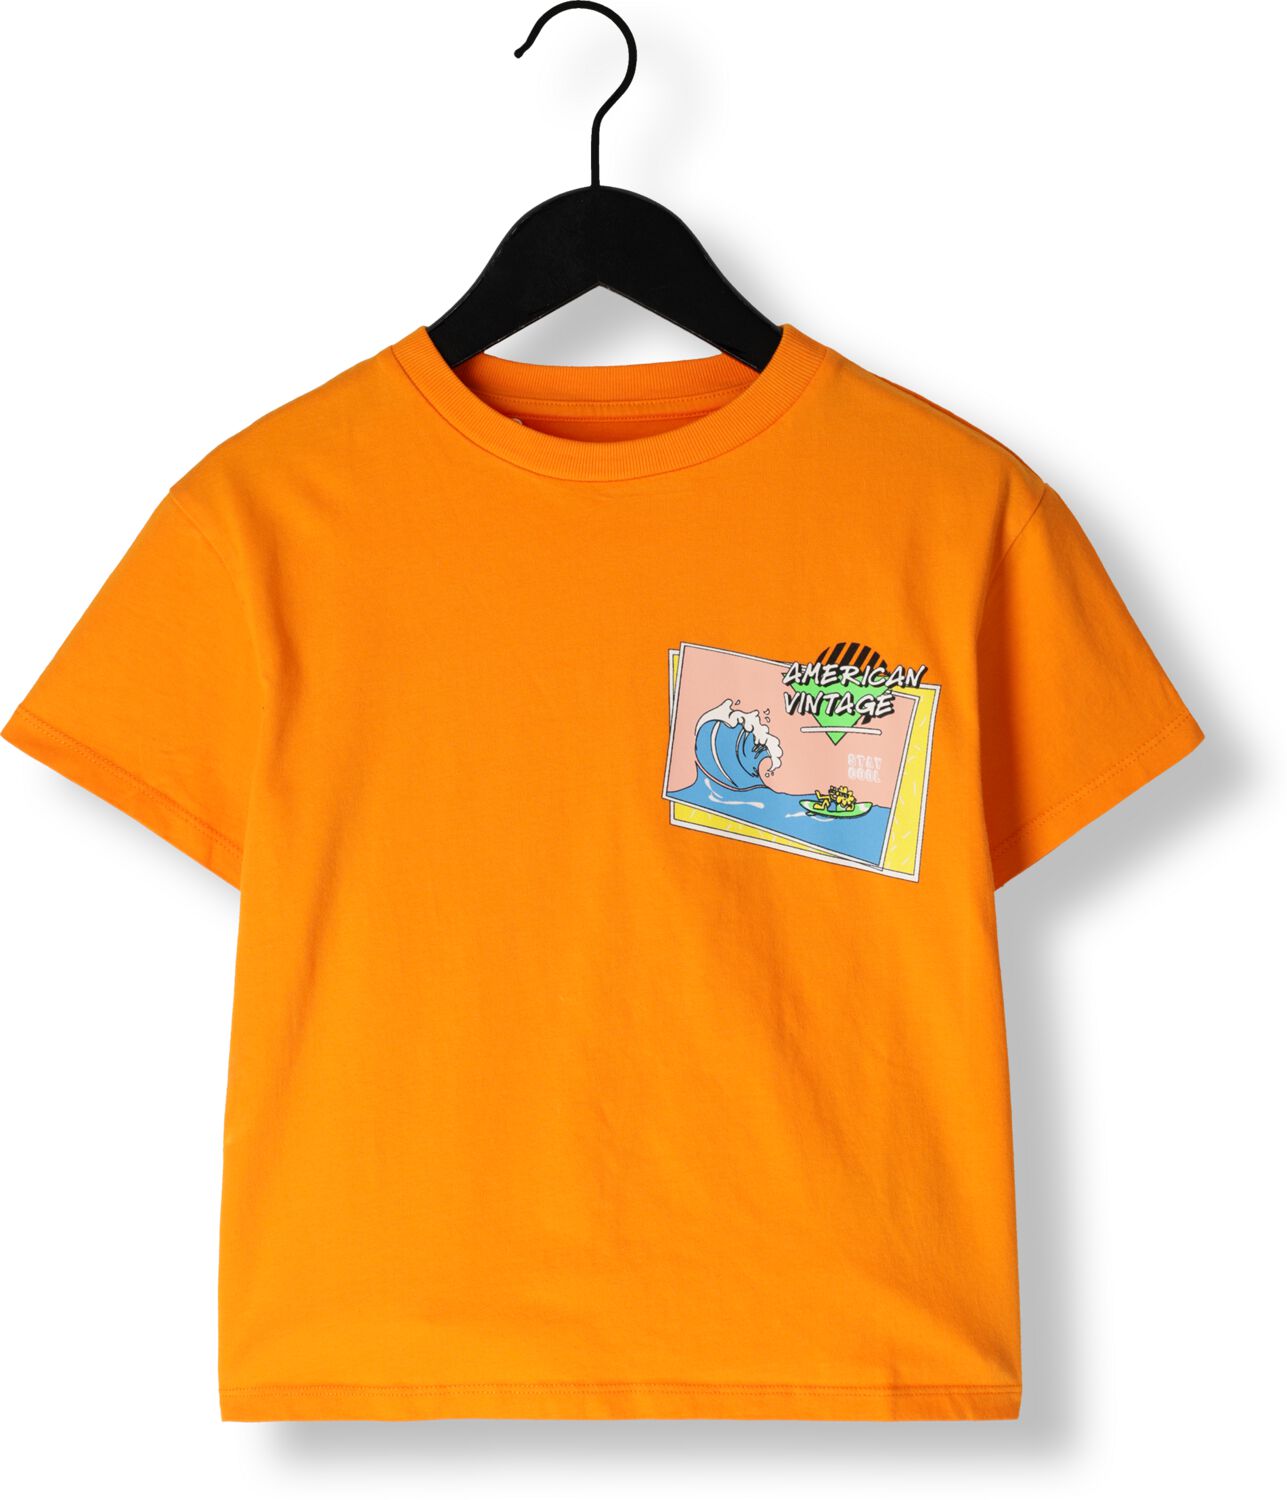 AMERICAN VINTAGE Jongens Polo's & T-shirts Fizvalley Oranje